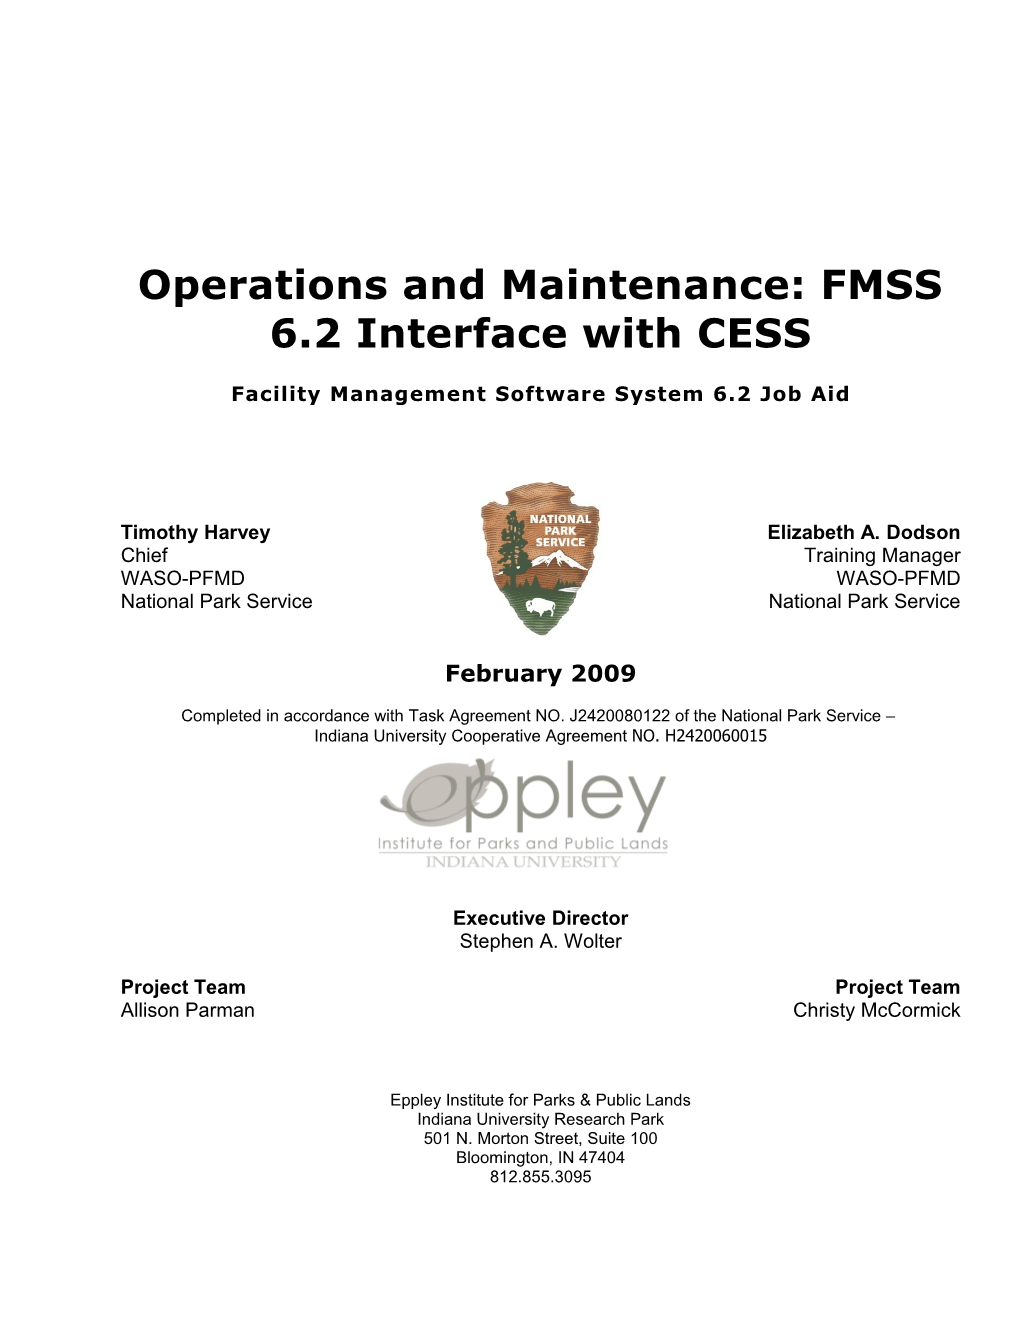 Operations and Maintenance: FMSS 6